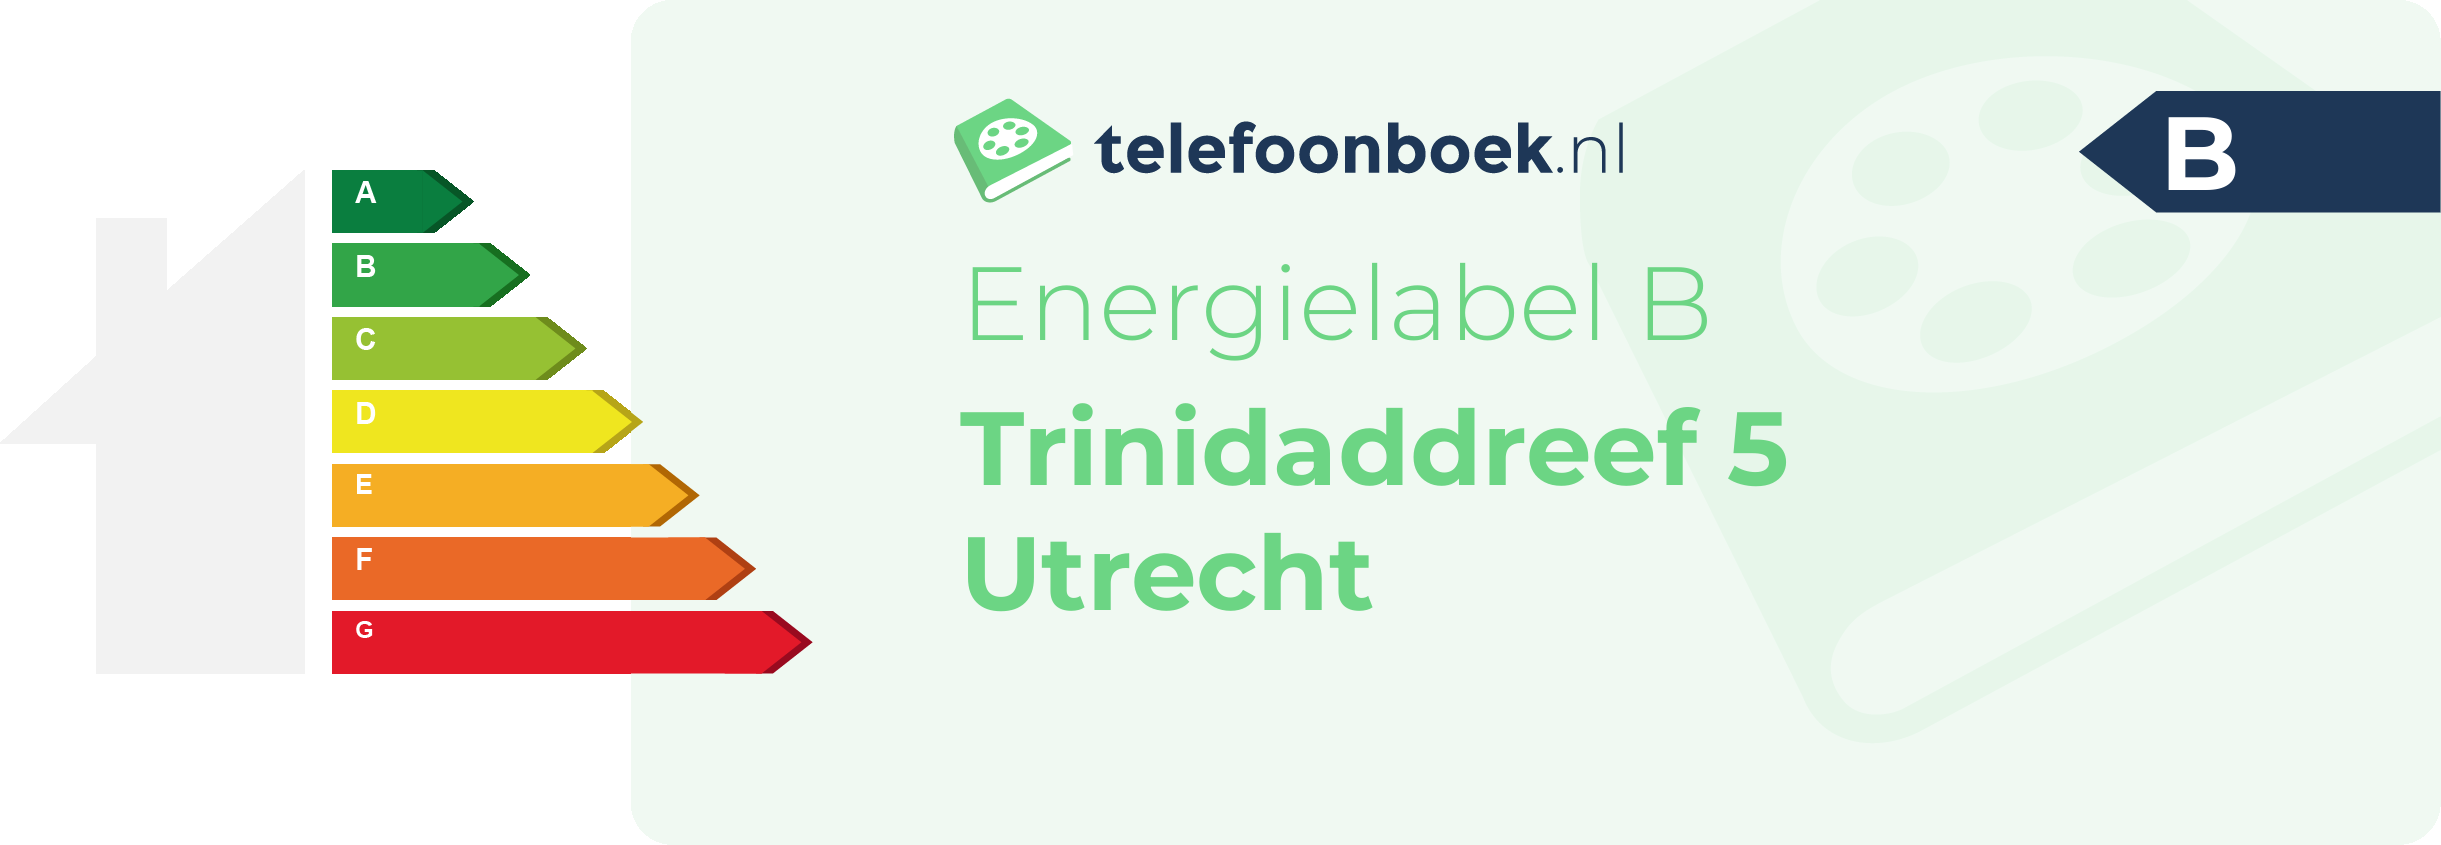 Energielabel Trinidaddreef 5 Utrecht